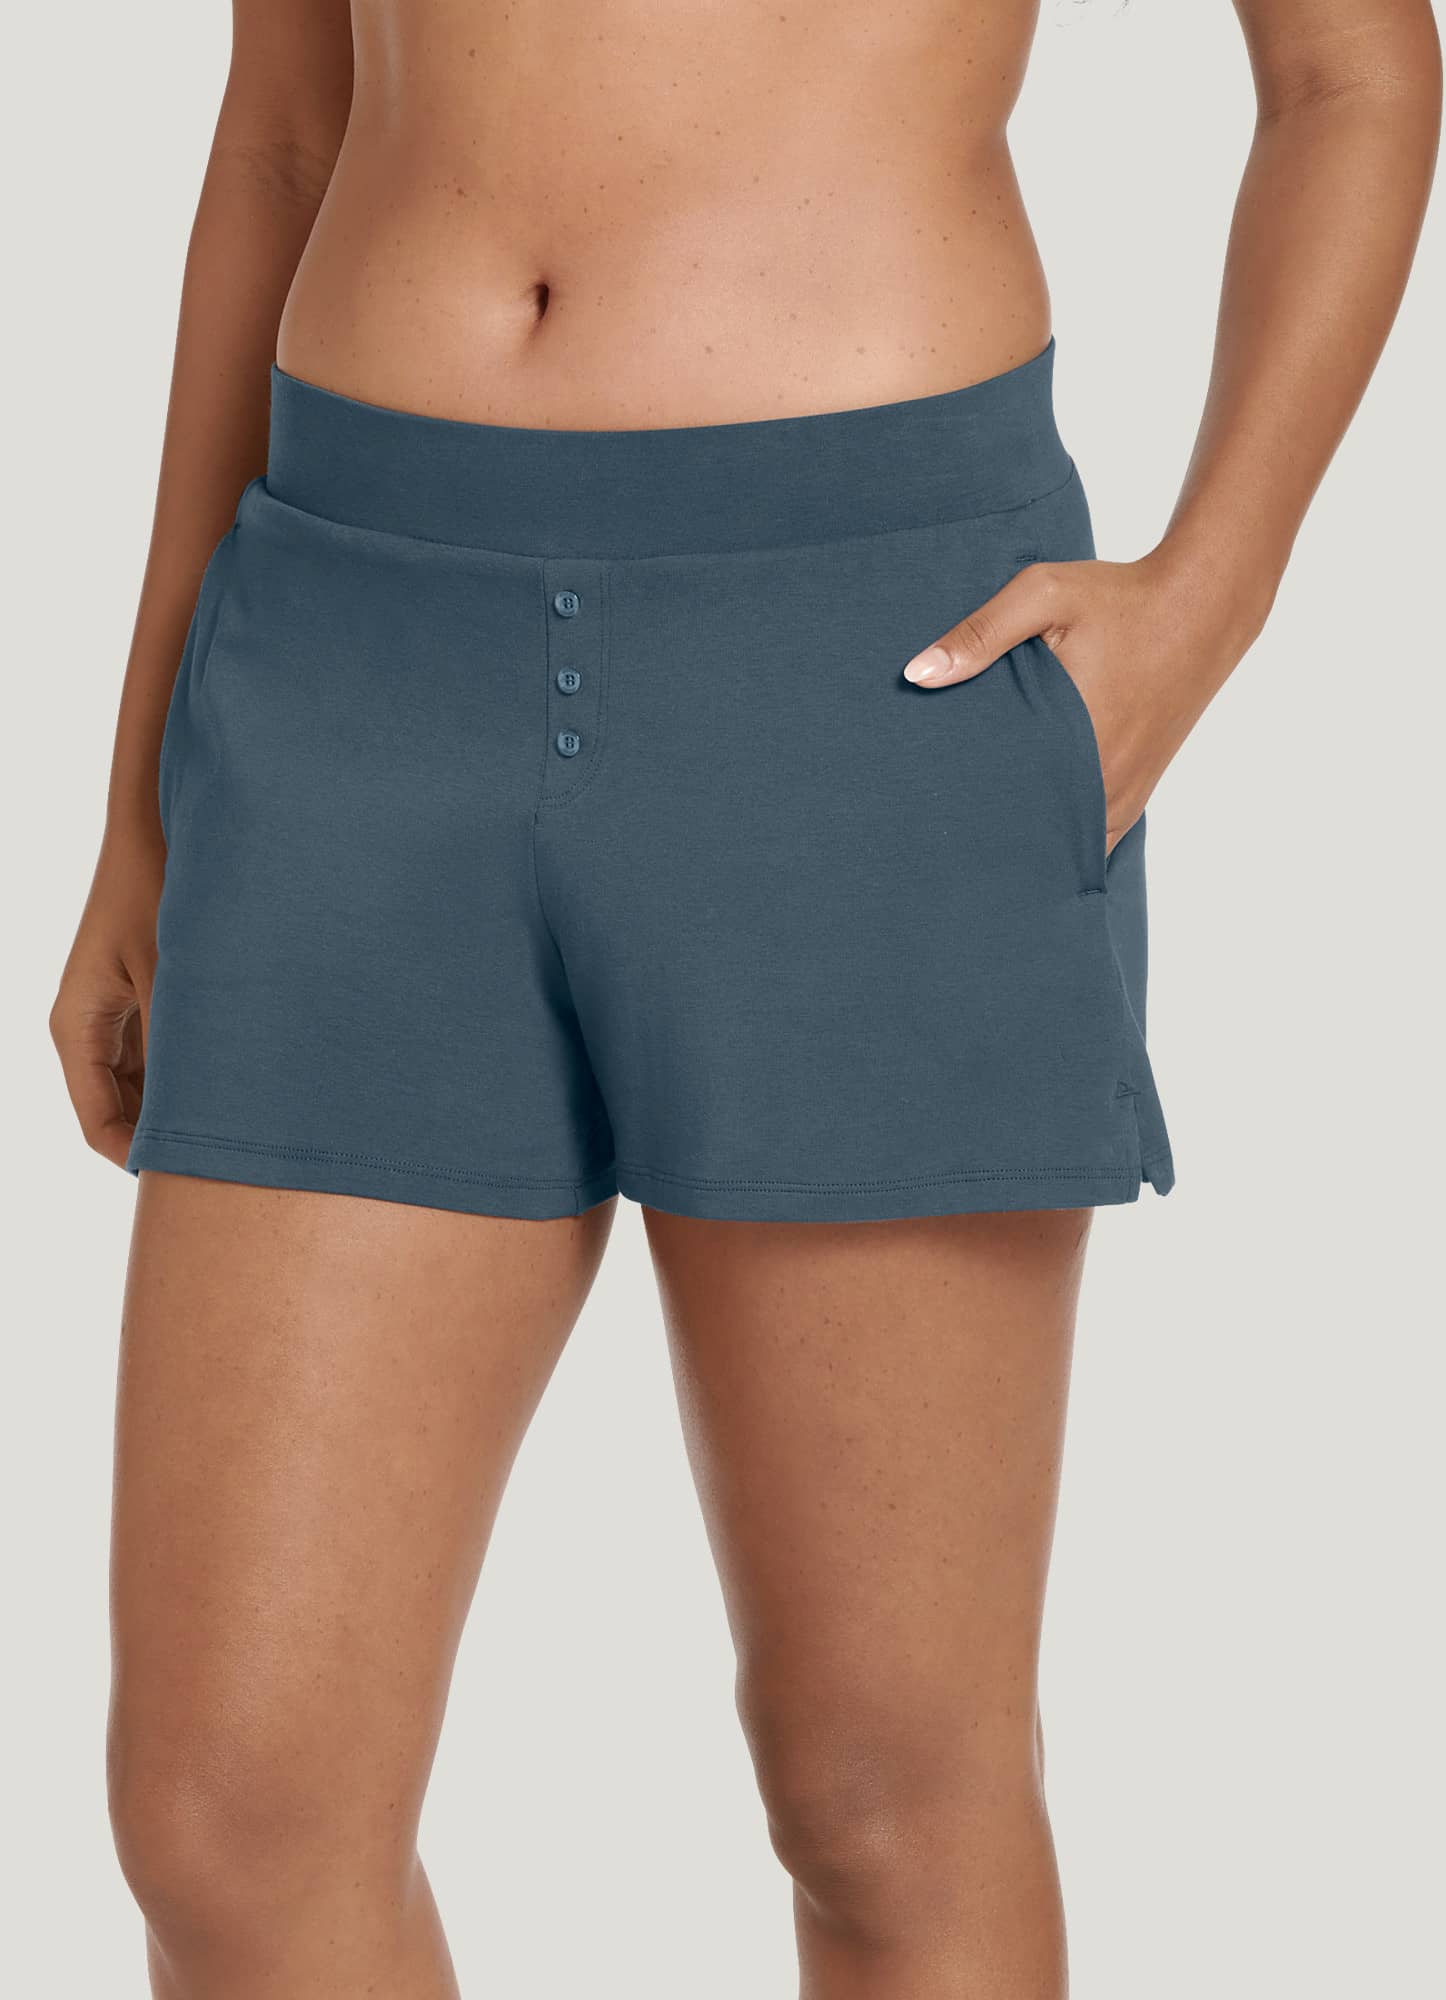 Buy Jockey Stretch Capri Pants - Grey at Rs.849 online | Activewear online